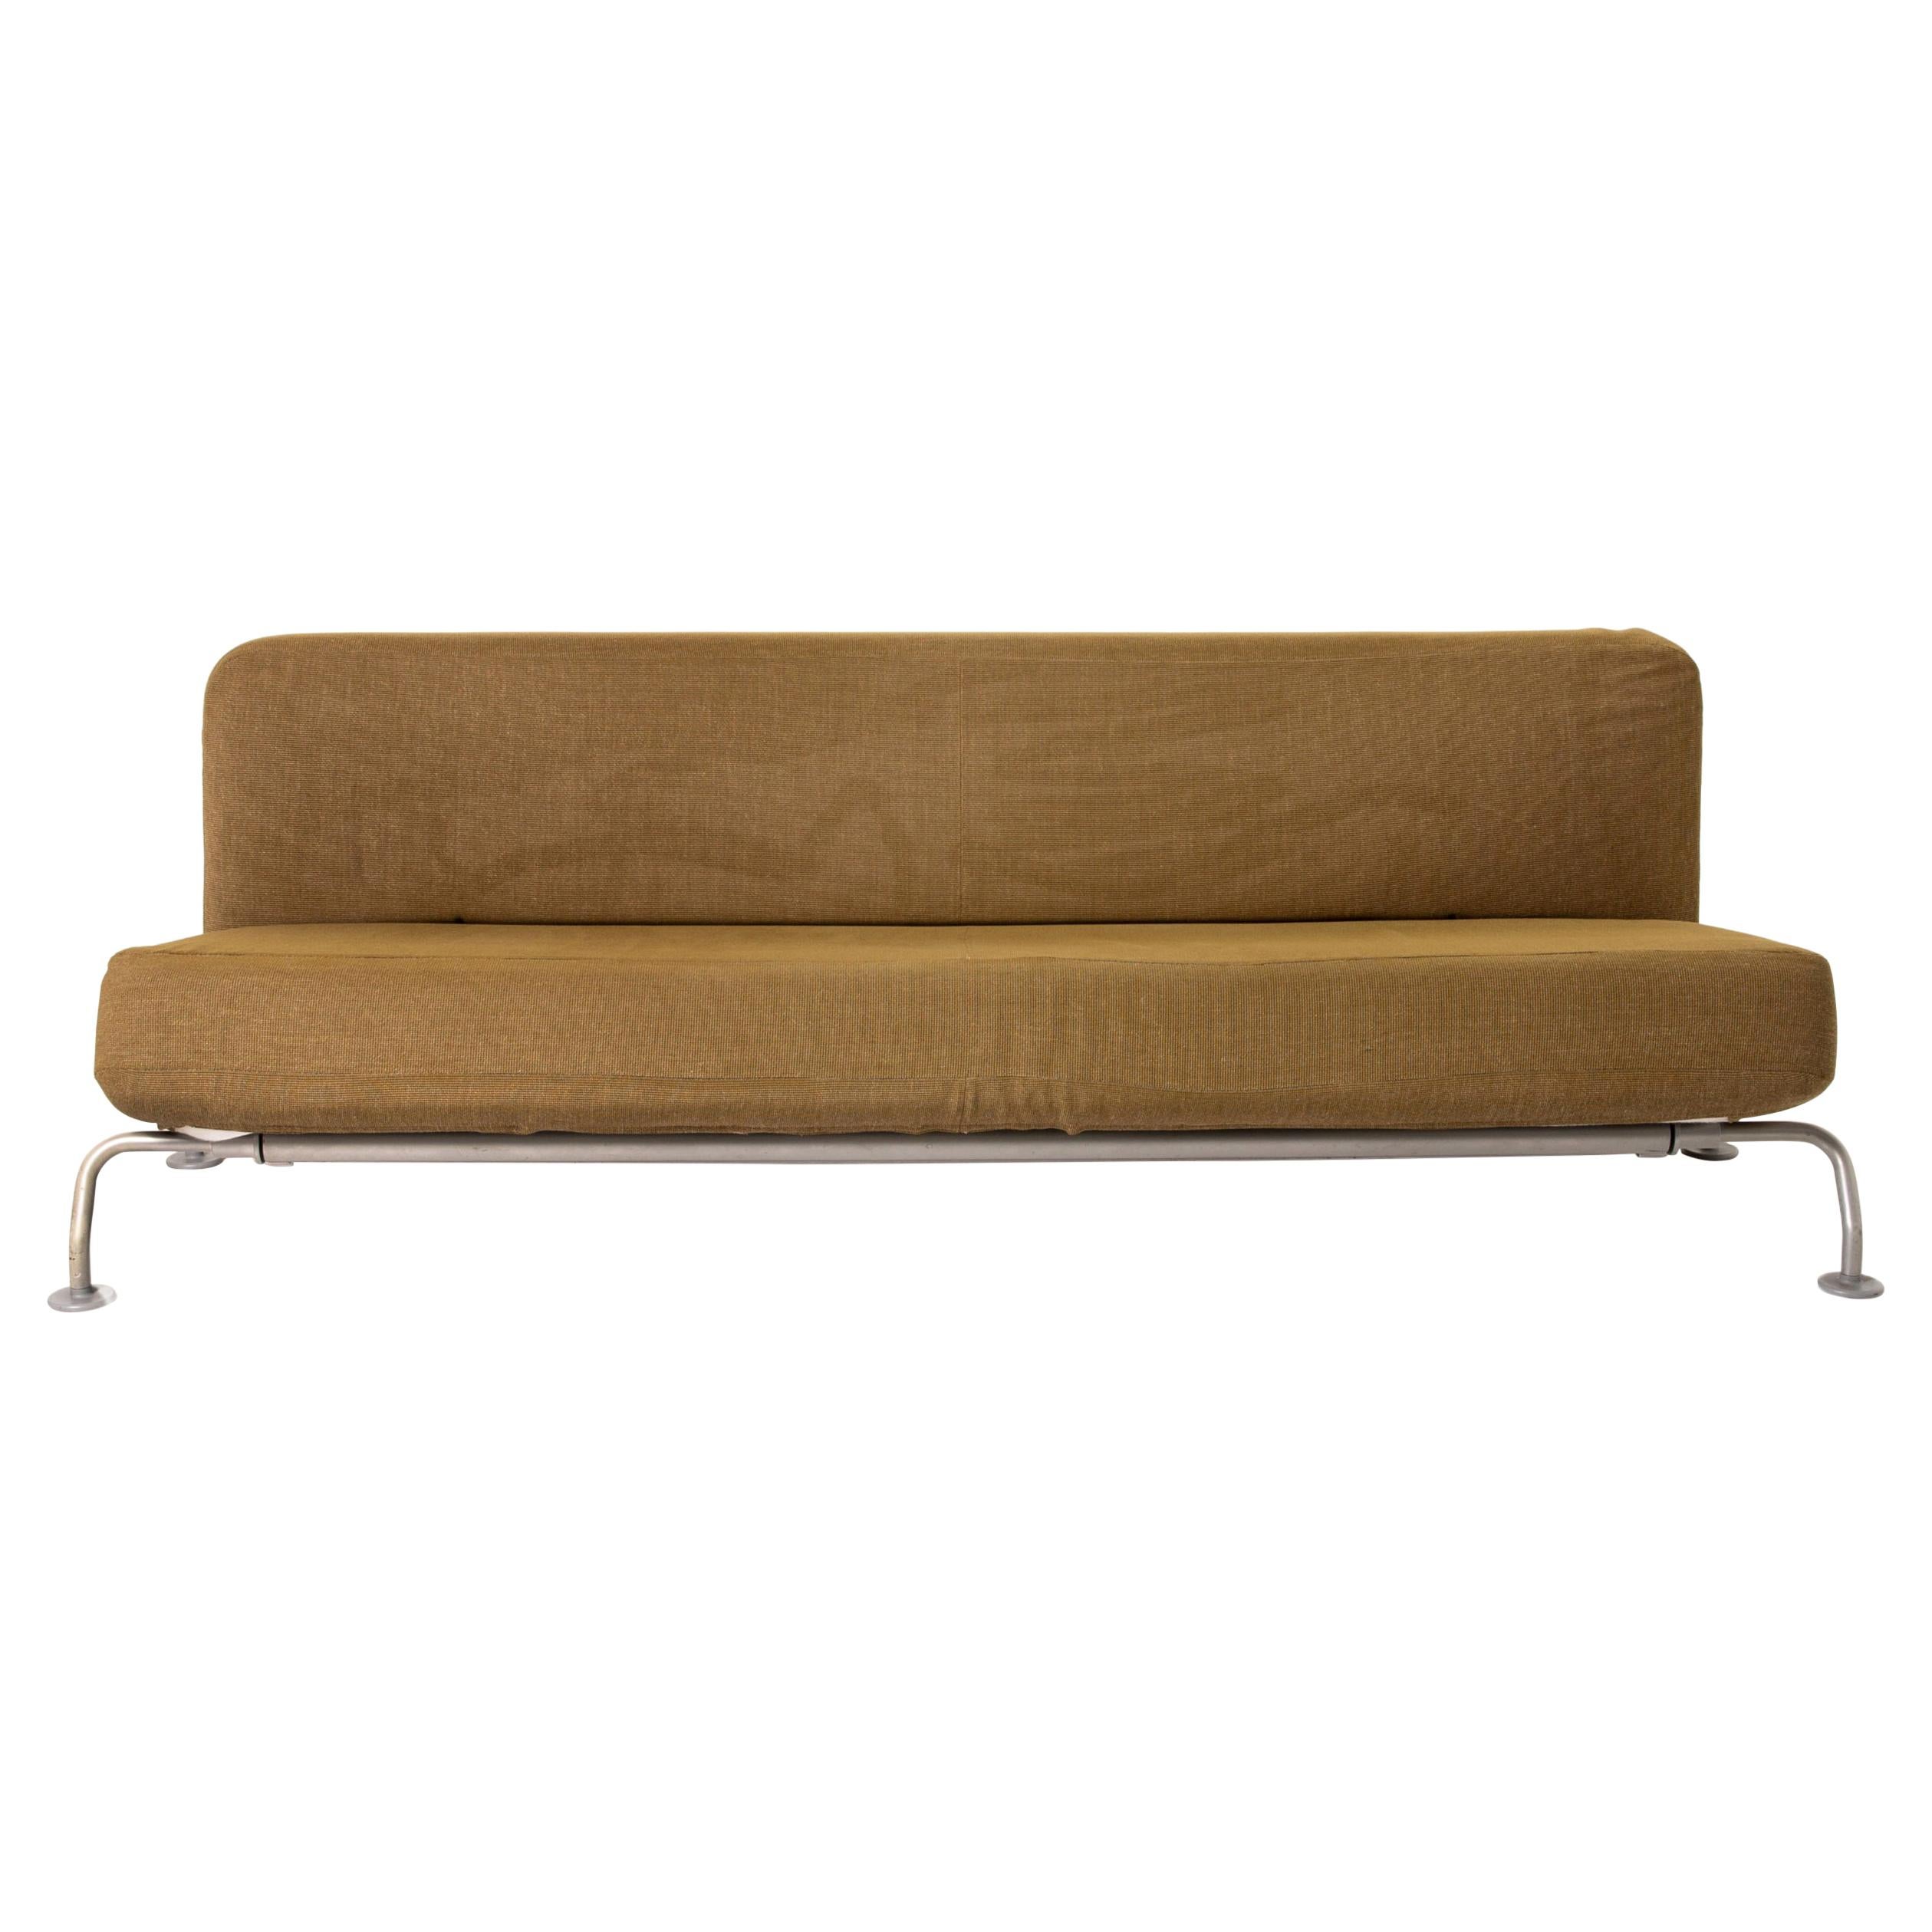 B&B Italia Lunar Fabric Sofa Bed Olive Green Three-Seater Function Sleeping